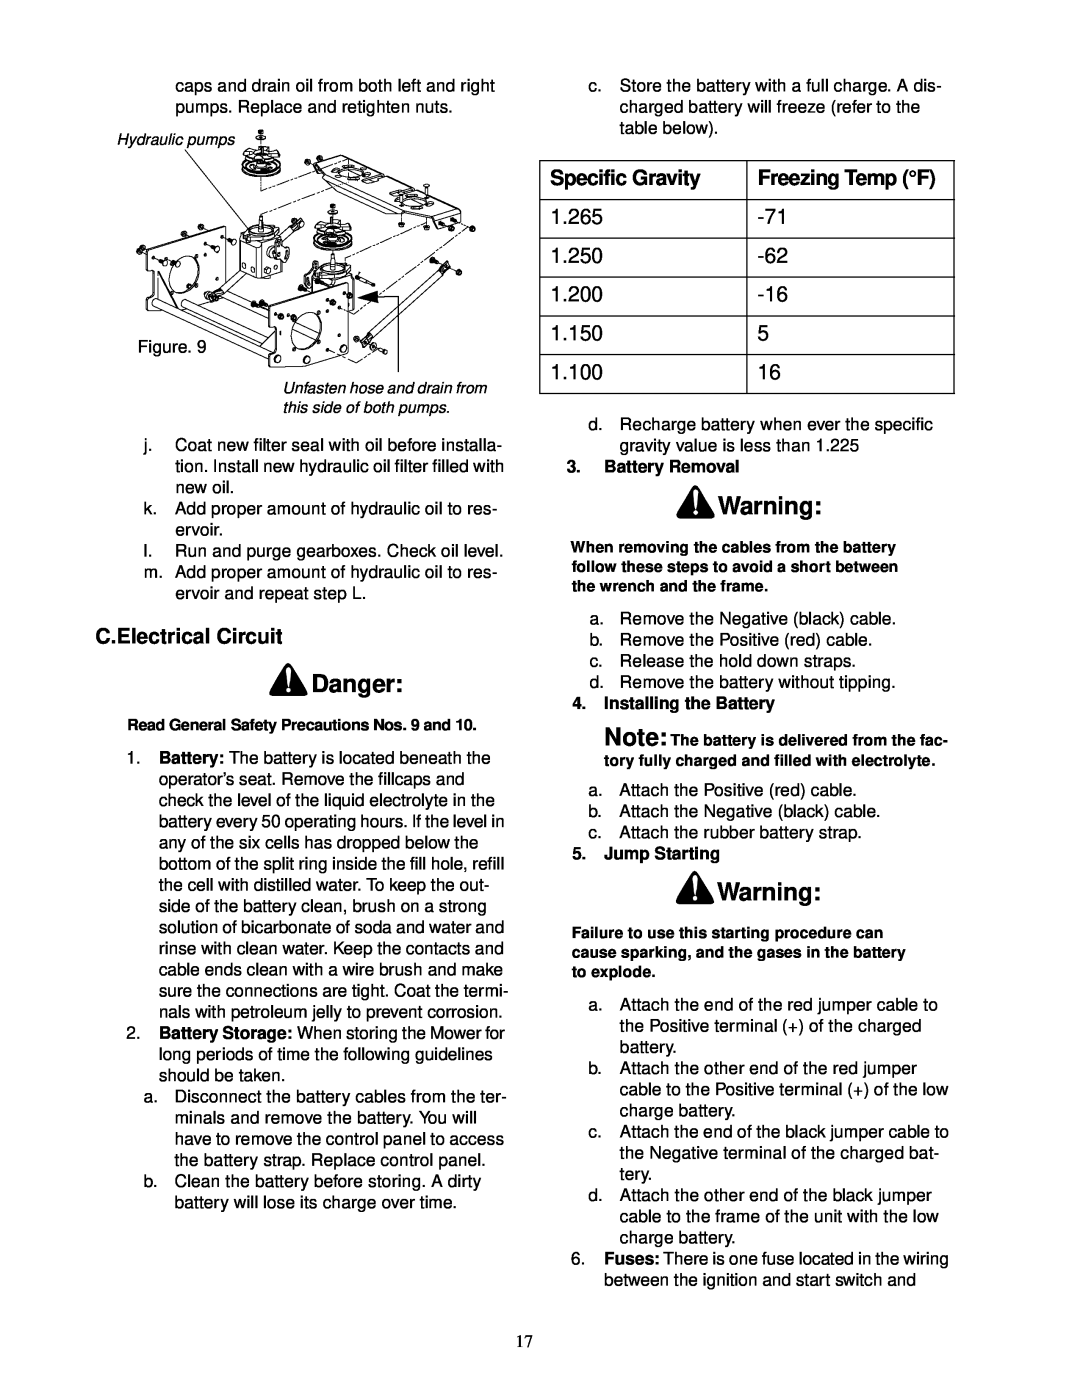 Cub Cadet service manual Danger, C.Electrical Circuit, Specific Gravity, Freezing Temp F 